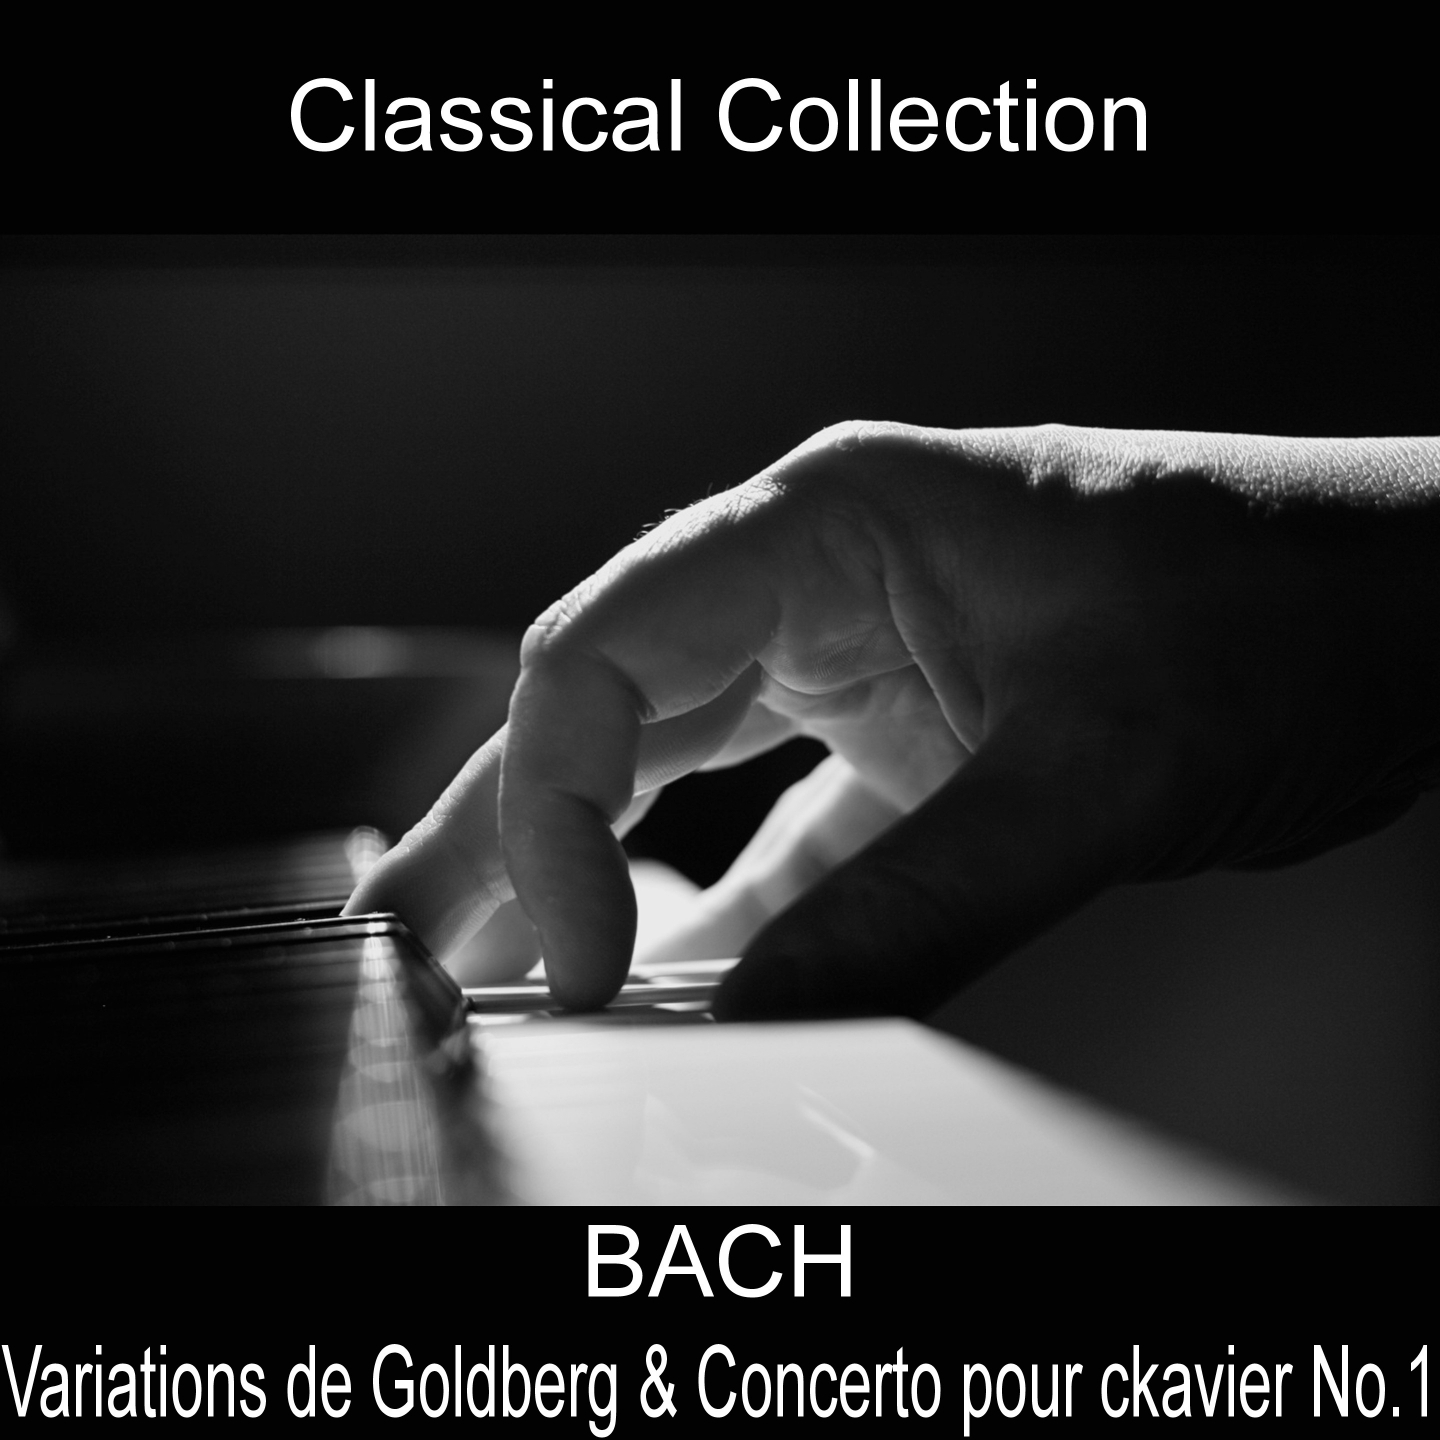 Variations Goldberg, BWV 988: No. 28, Variation XXVII Canone alla Nona